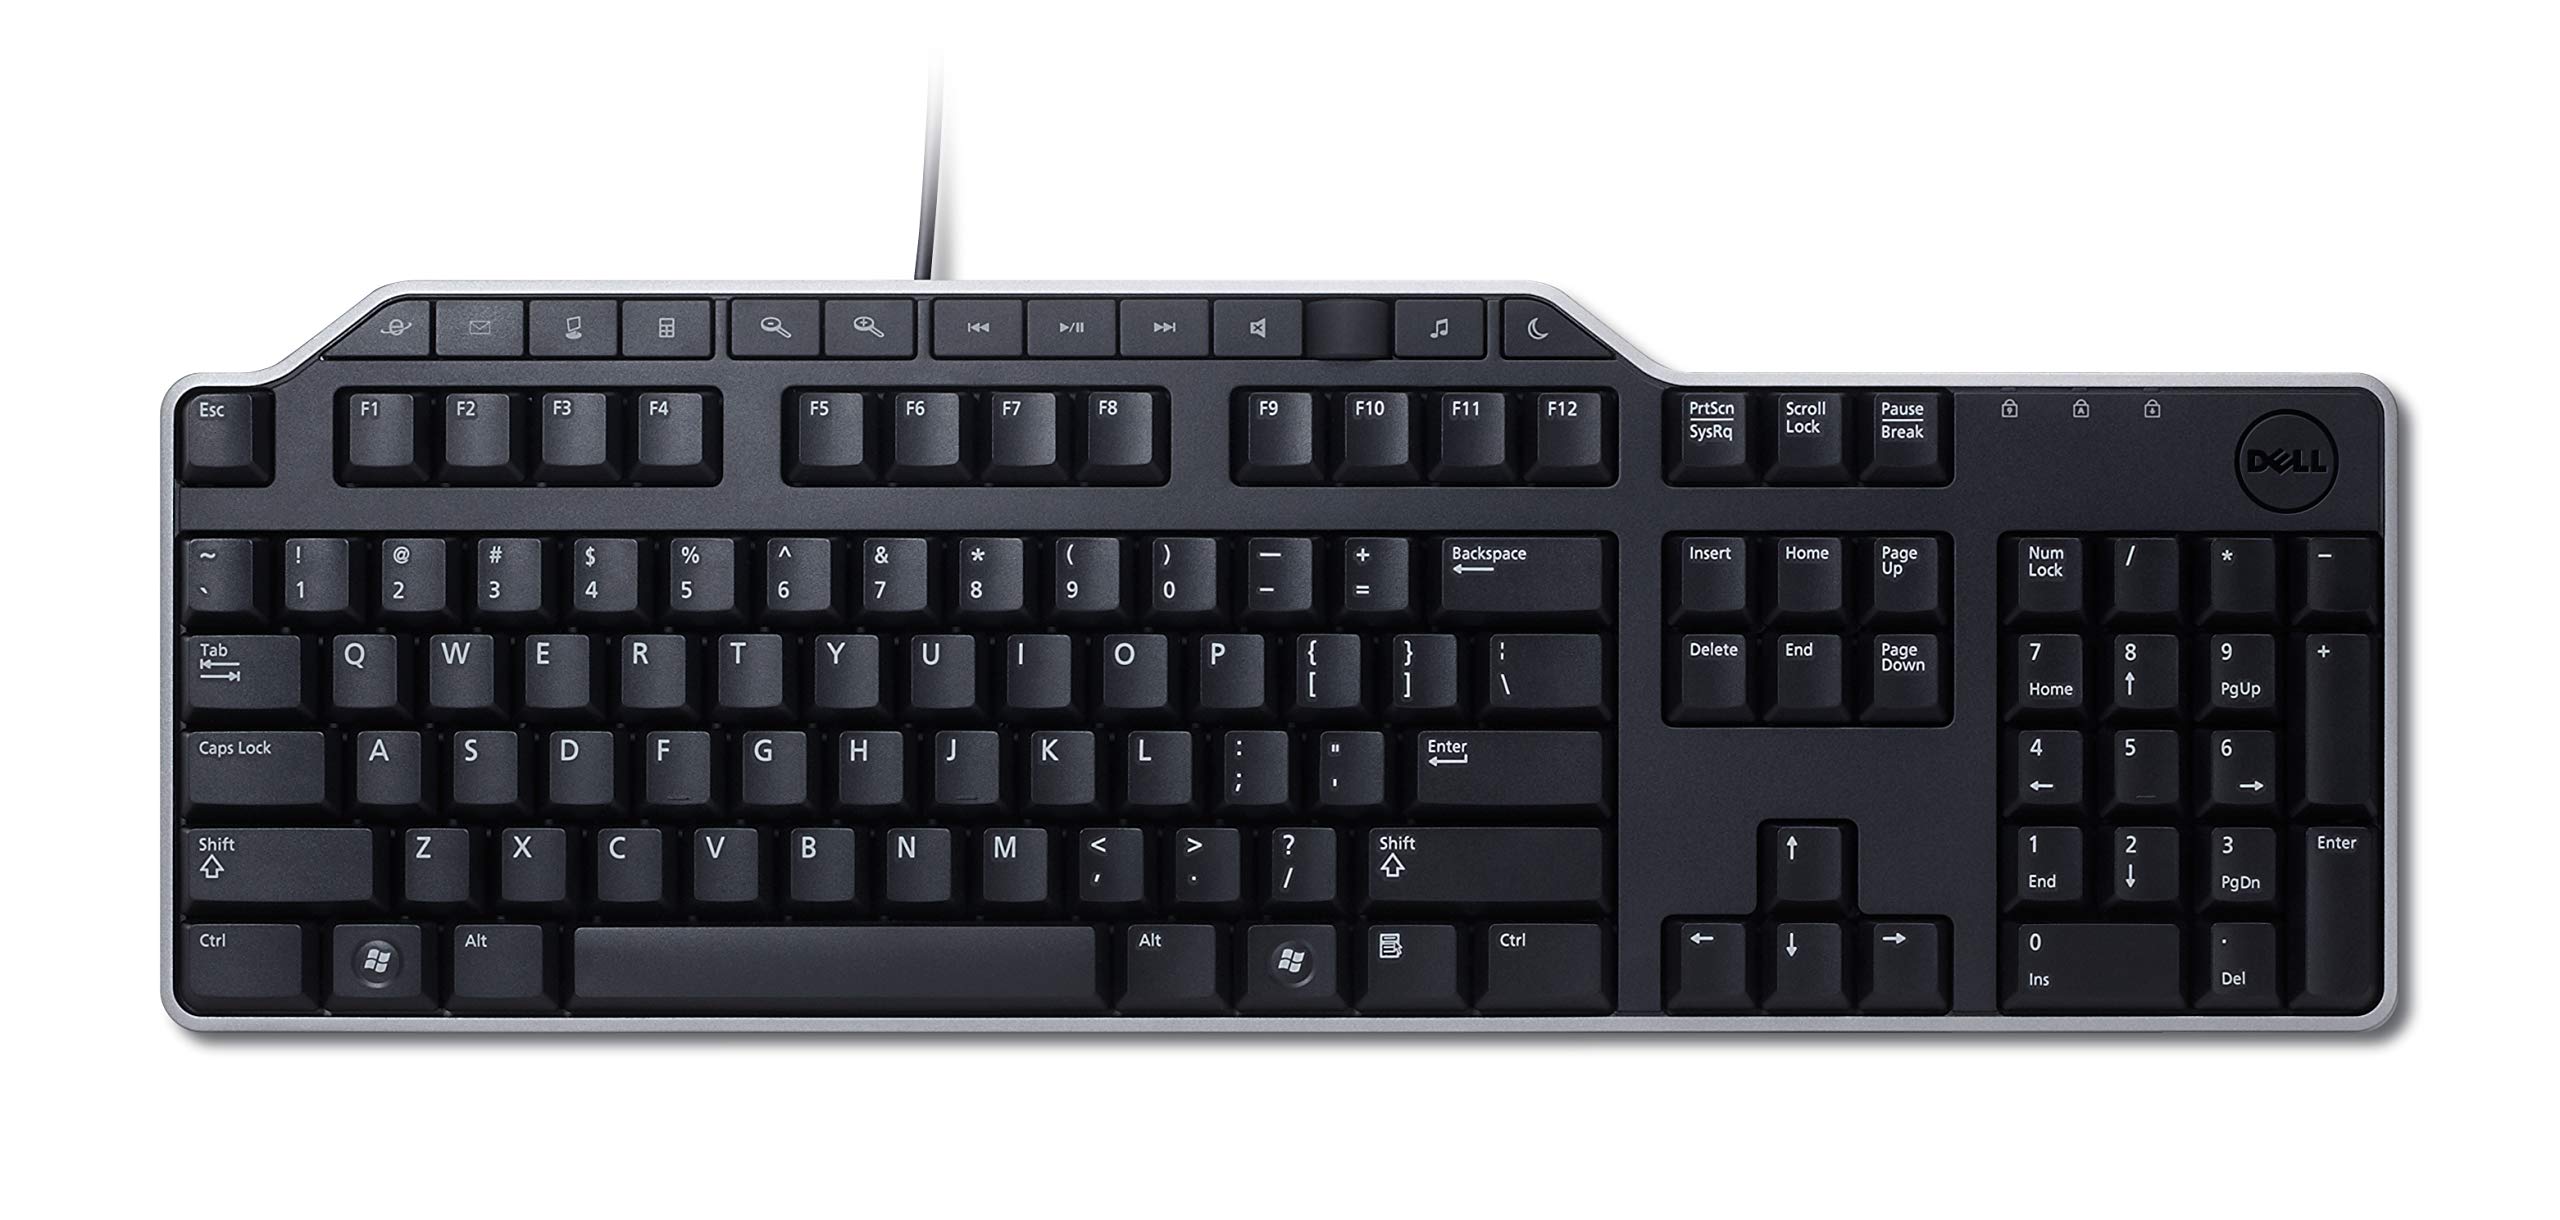 Dell Business Multimedia Keyboard - KB522, Black